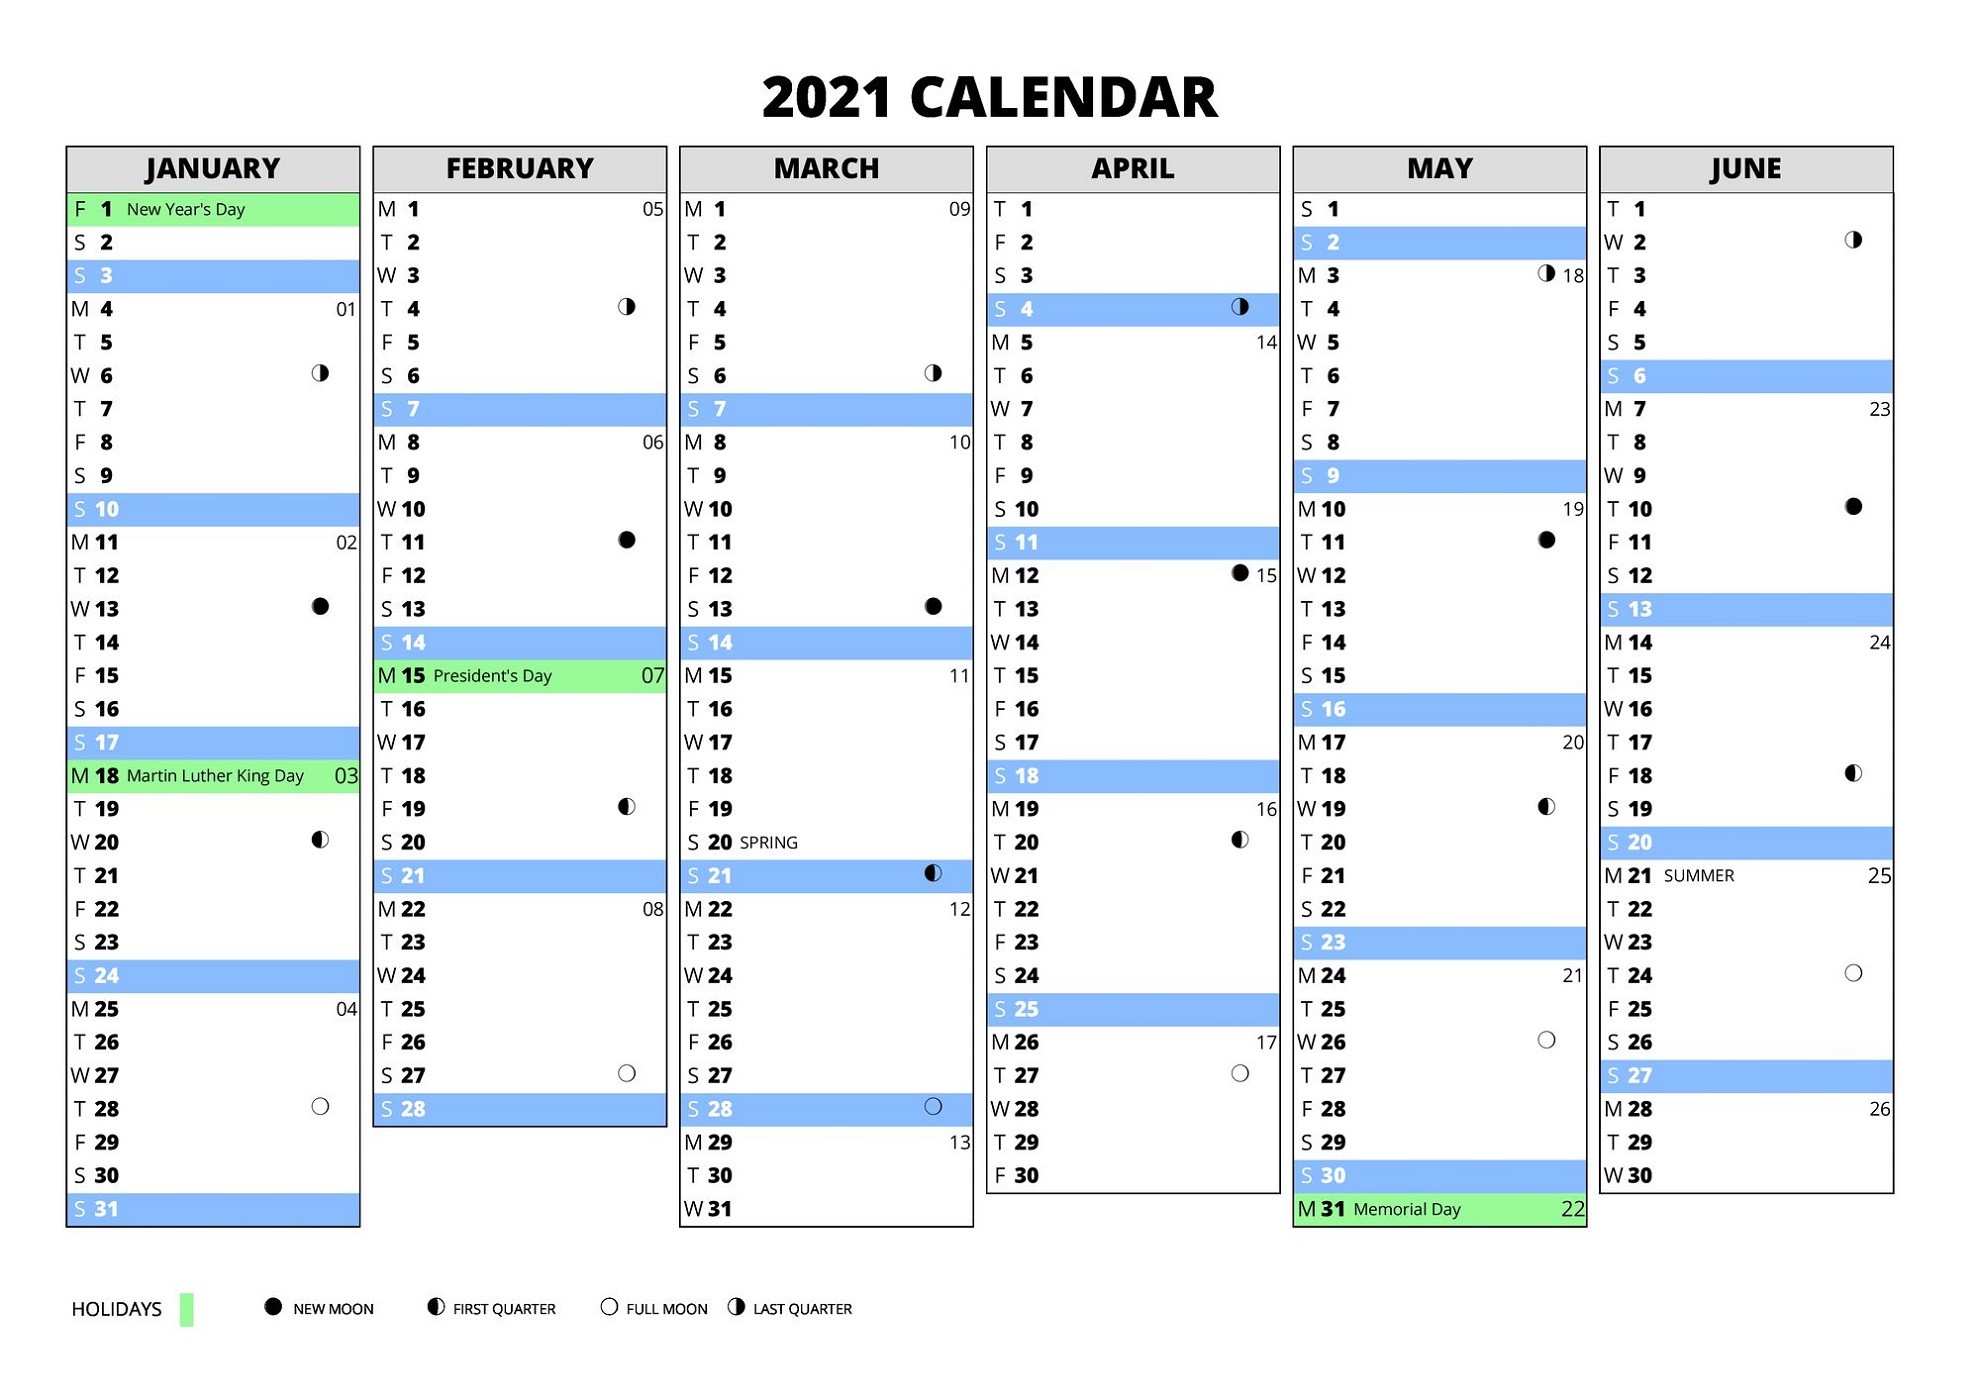 Monthly Calendar 2021 Template Big Font Free Download 2021 Monthly Calendar Template Big Font Full Page